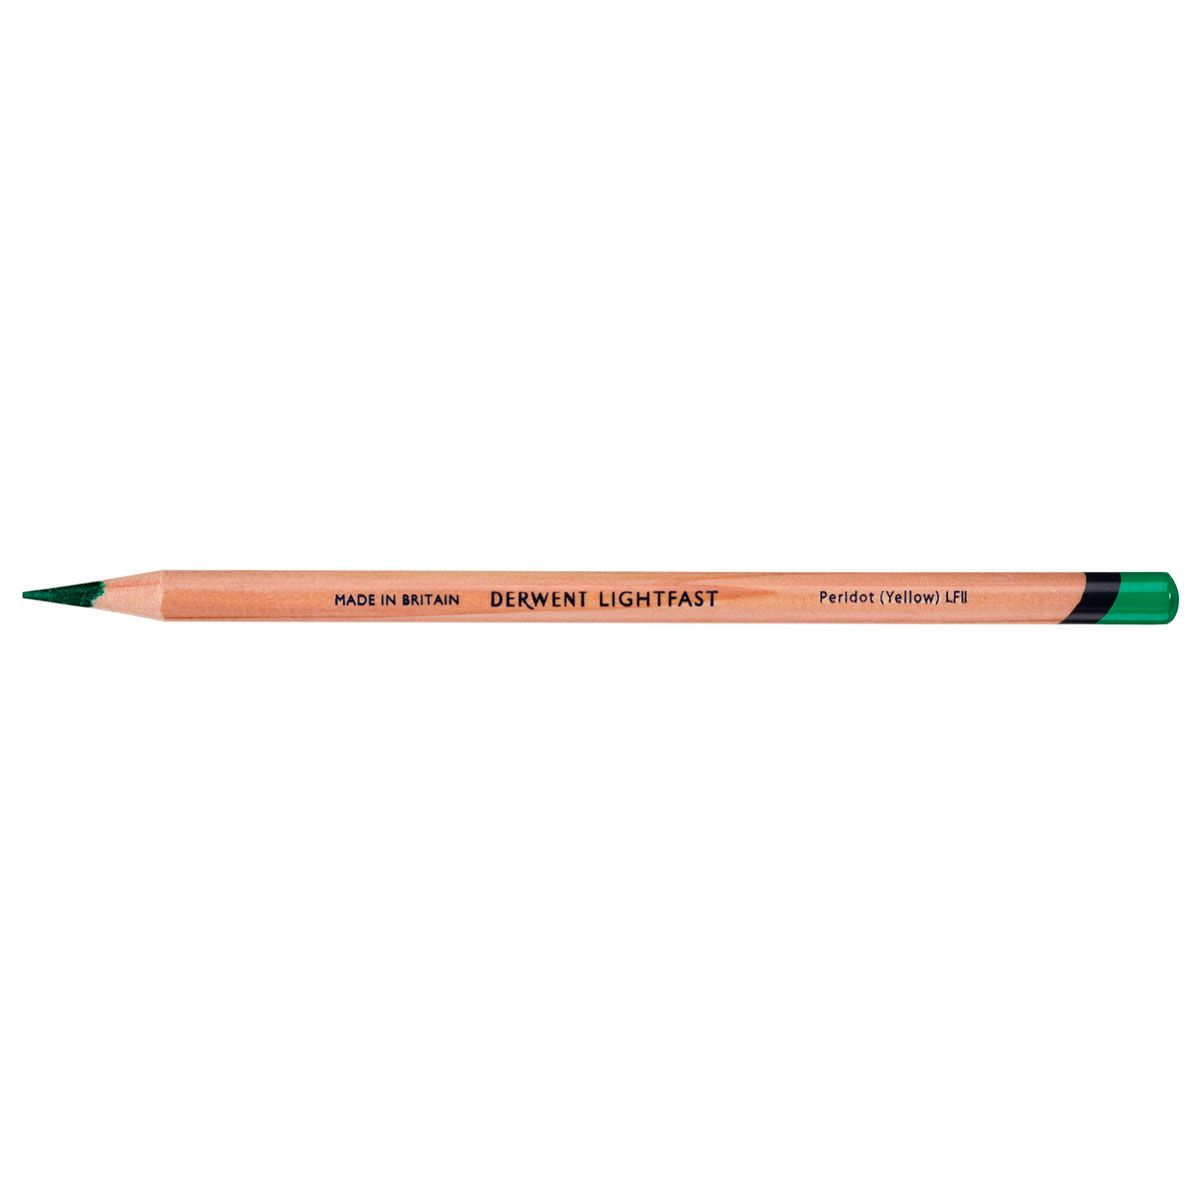 NEW Derwent Lightfast Pencil Colour: Peridot (Yellow)